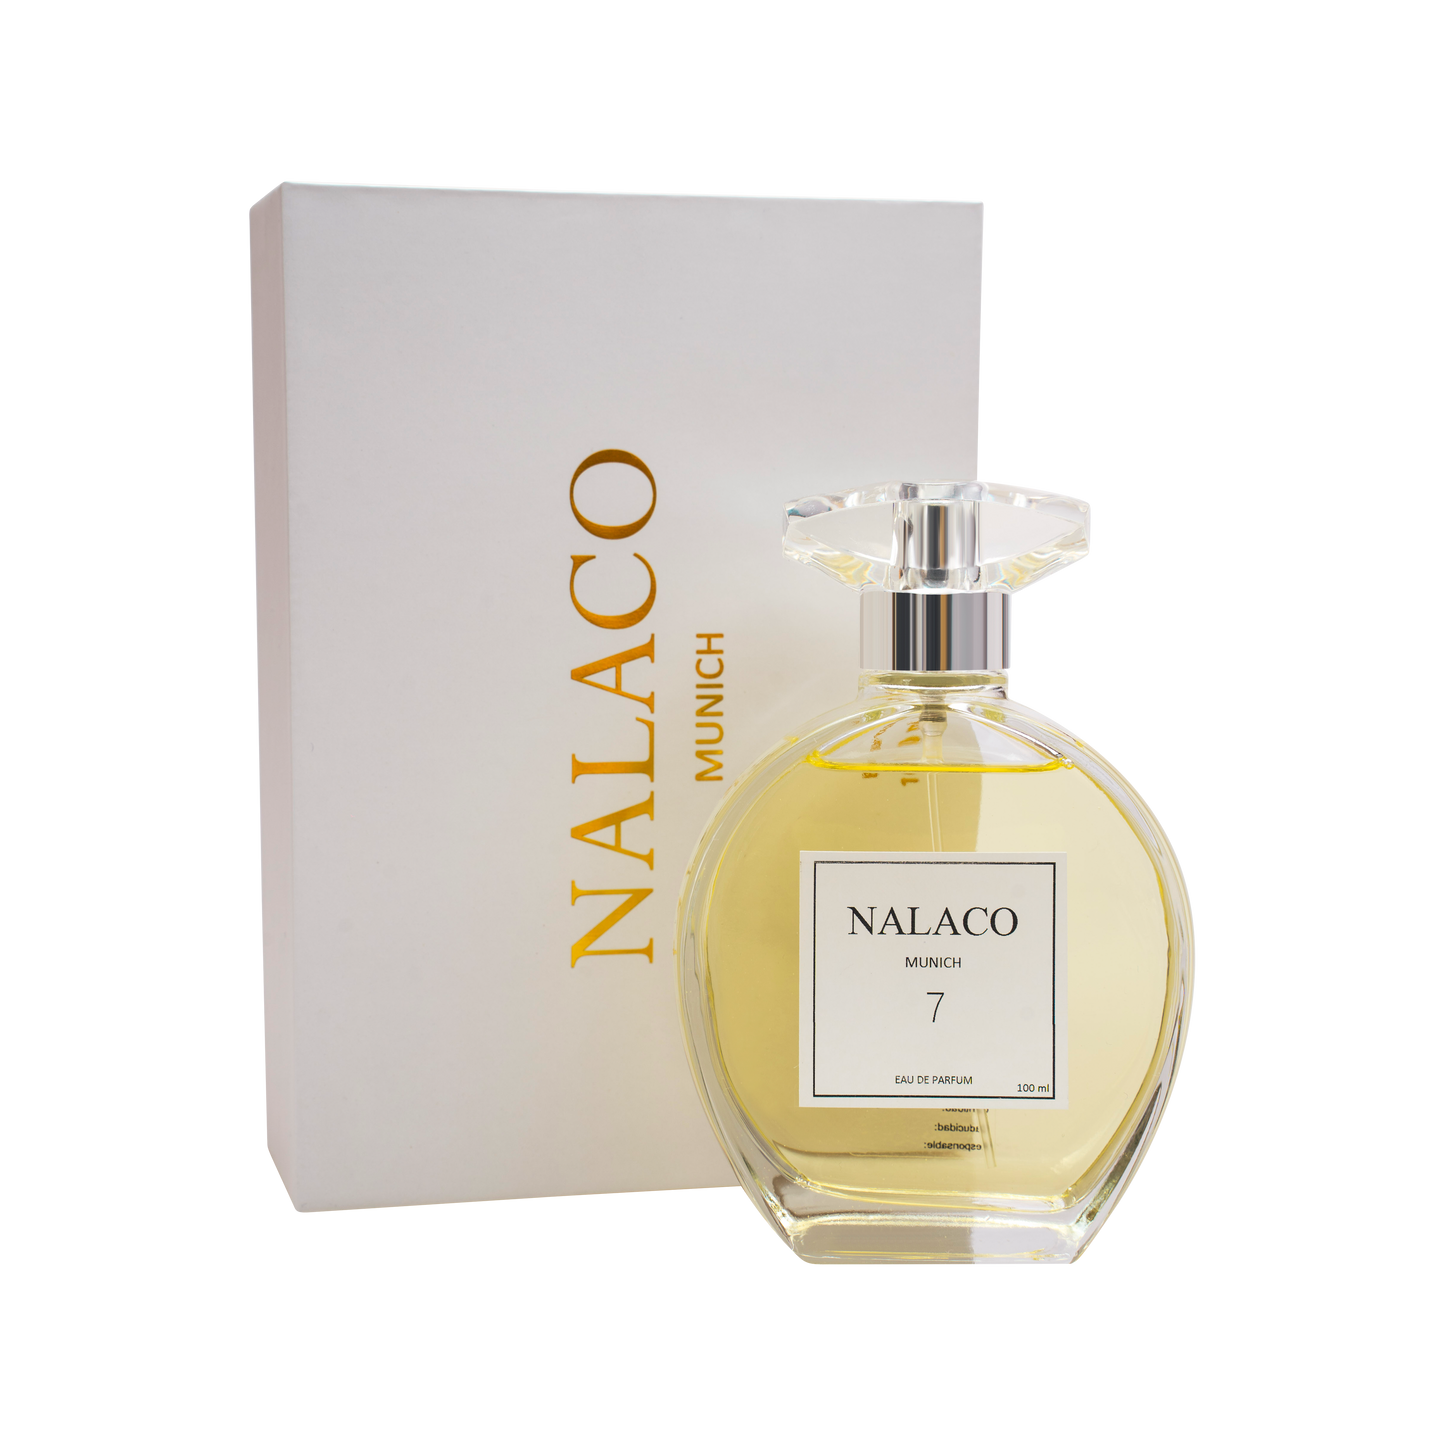 Nalaco No. 7 inspired by Giorgio Armani Diamonds